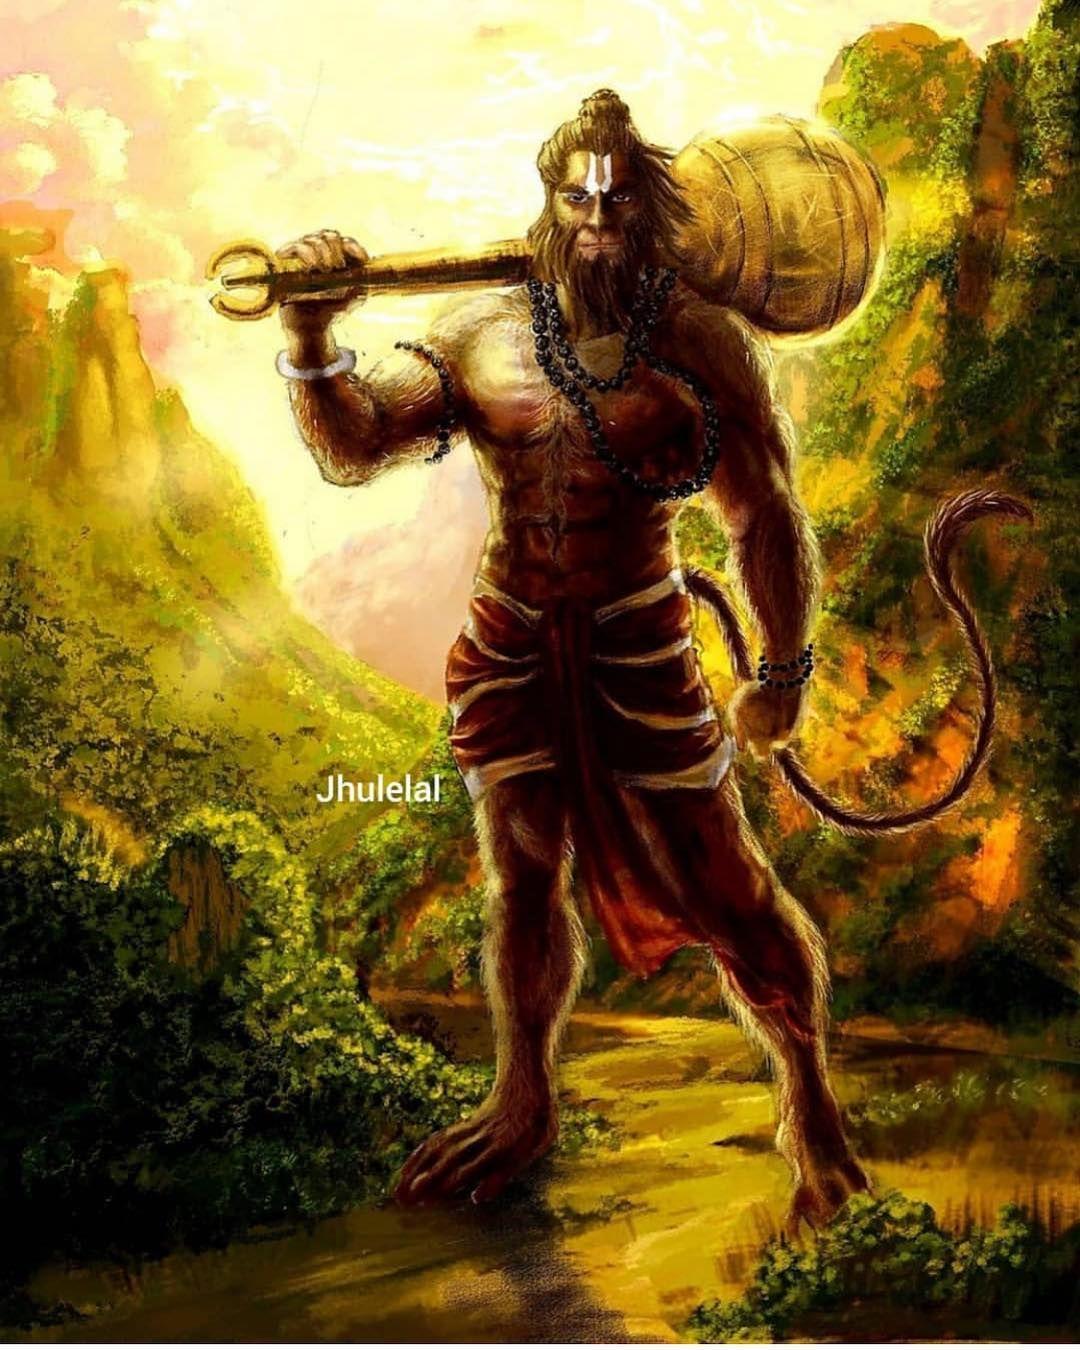 Image may contain: 1 person. Jai hanuman, Hanuman, Lord hanuman